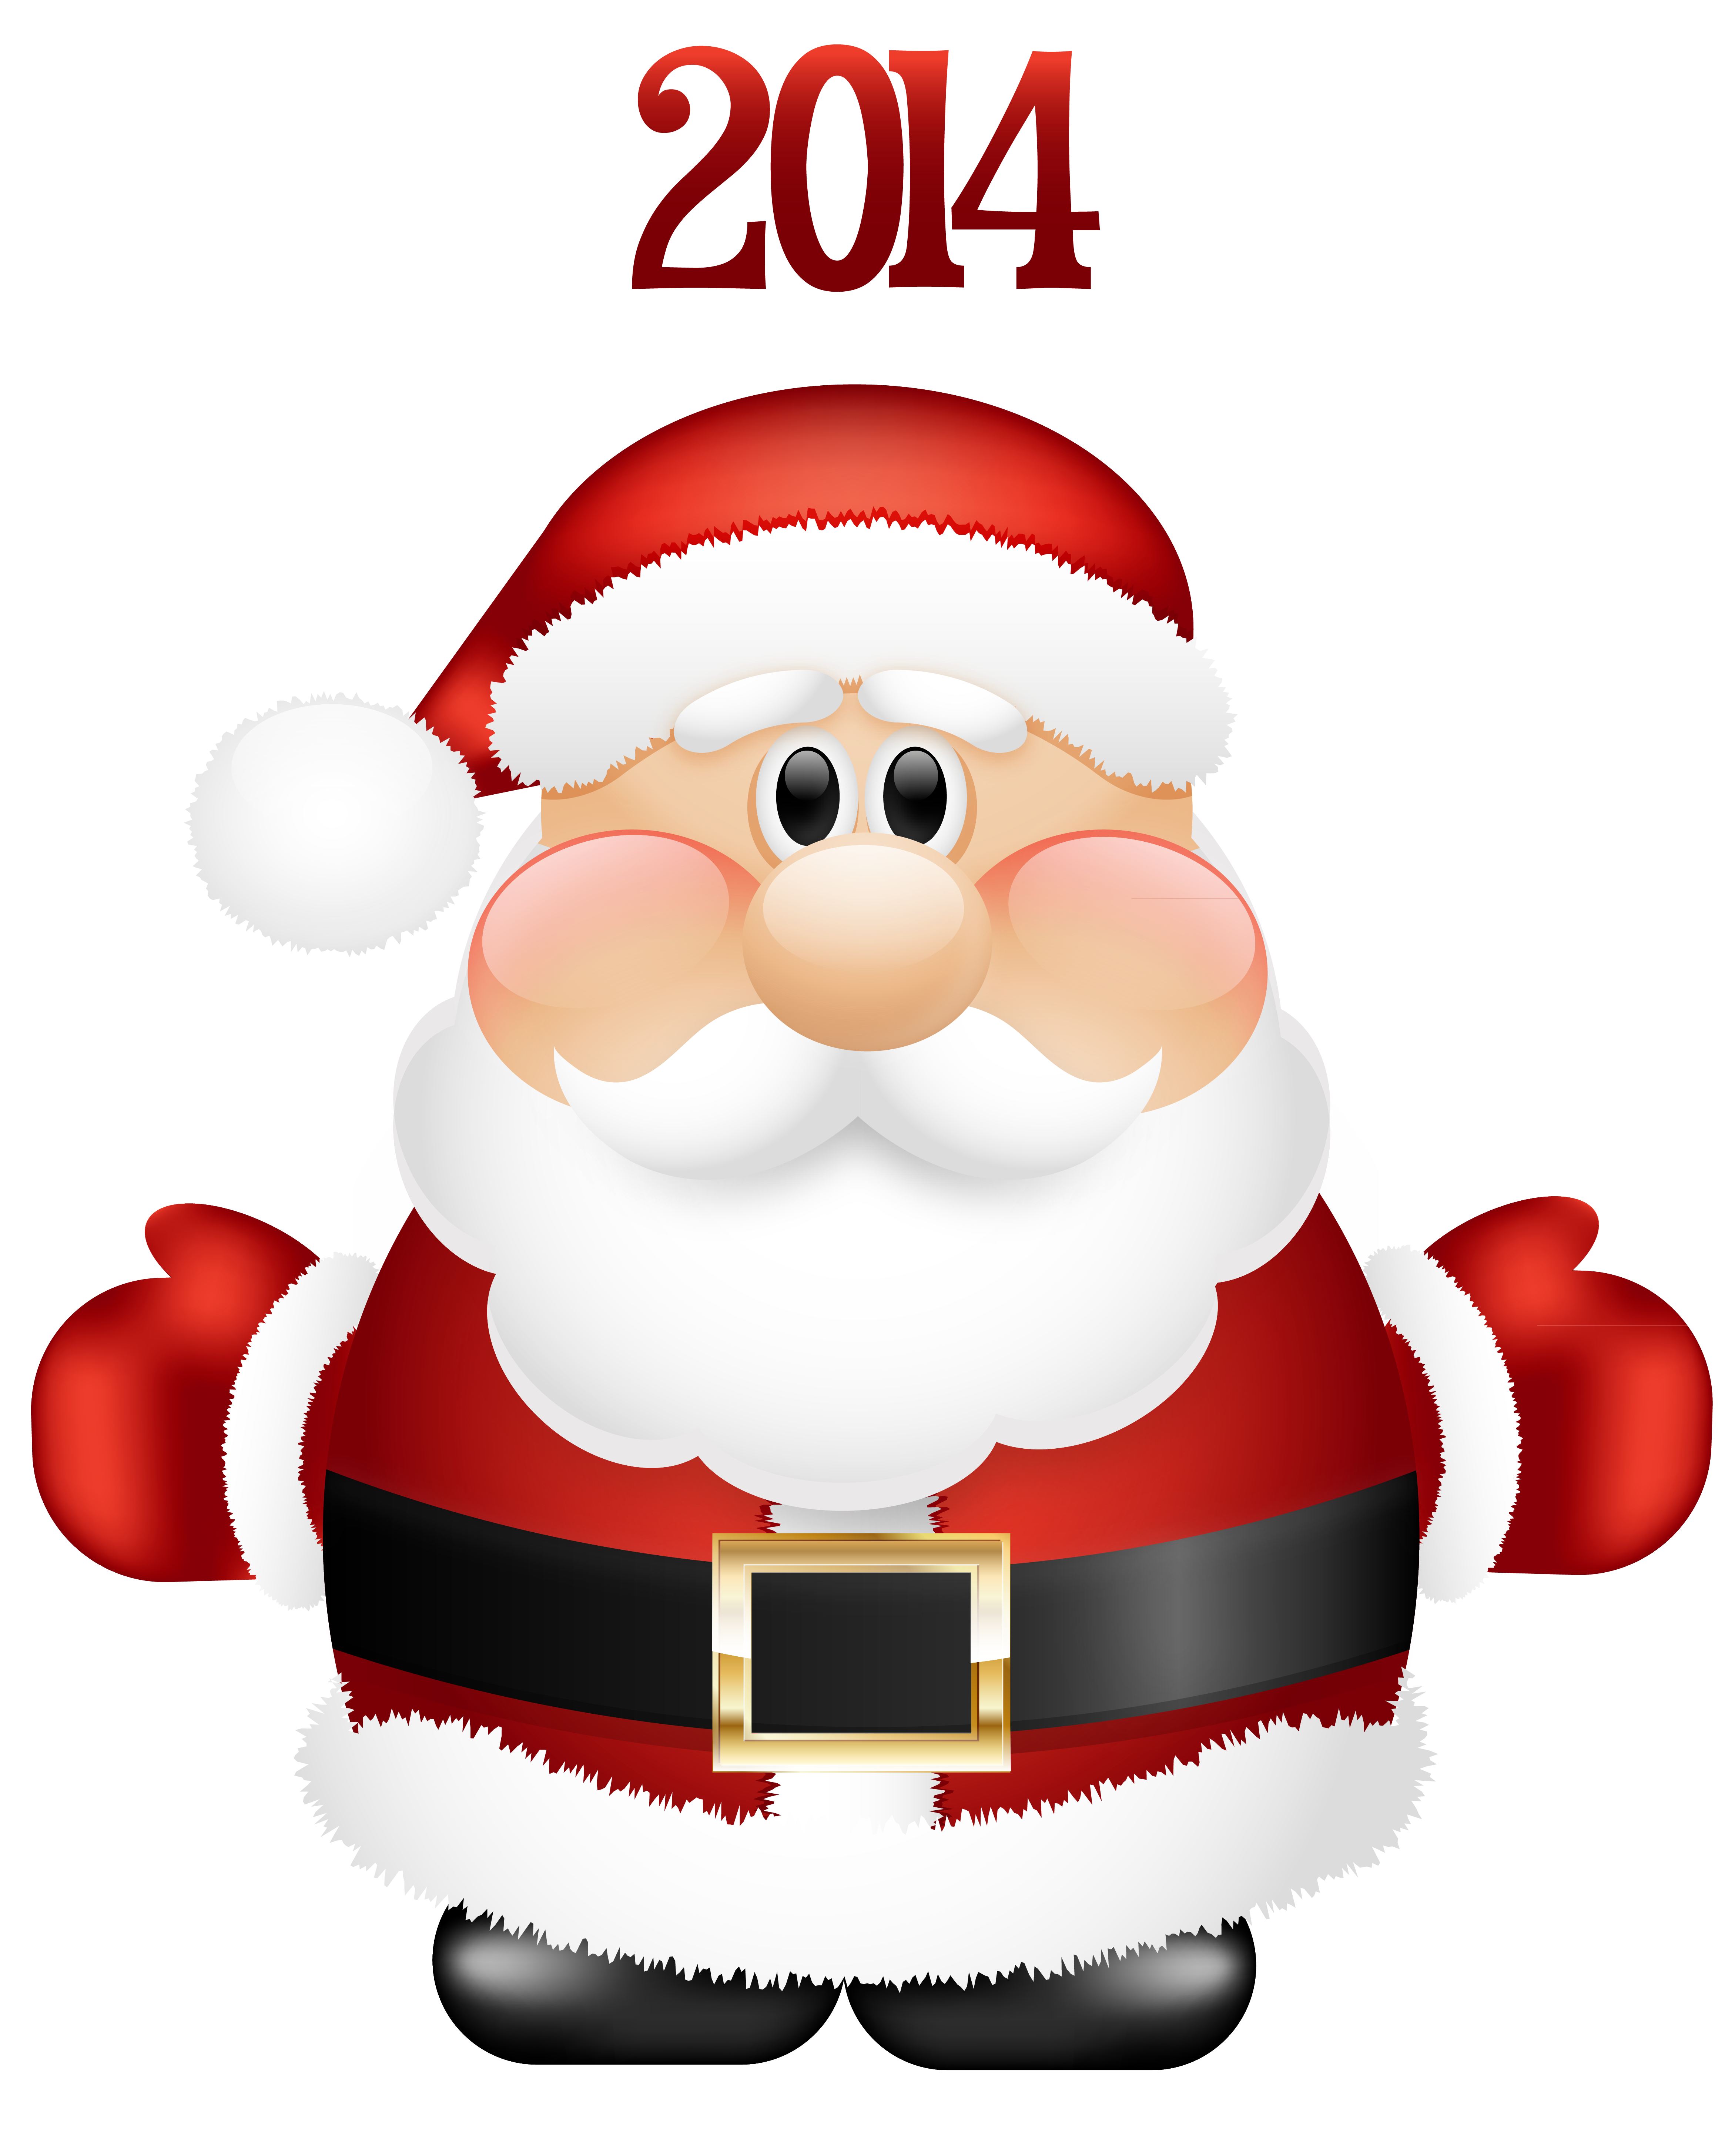 Santa Claus Pictures Images | Free Download Clip Art | Free Clip ...